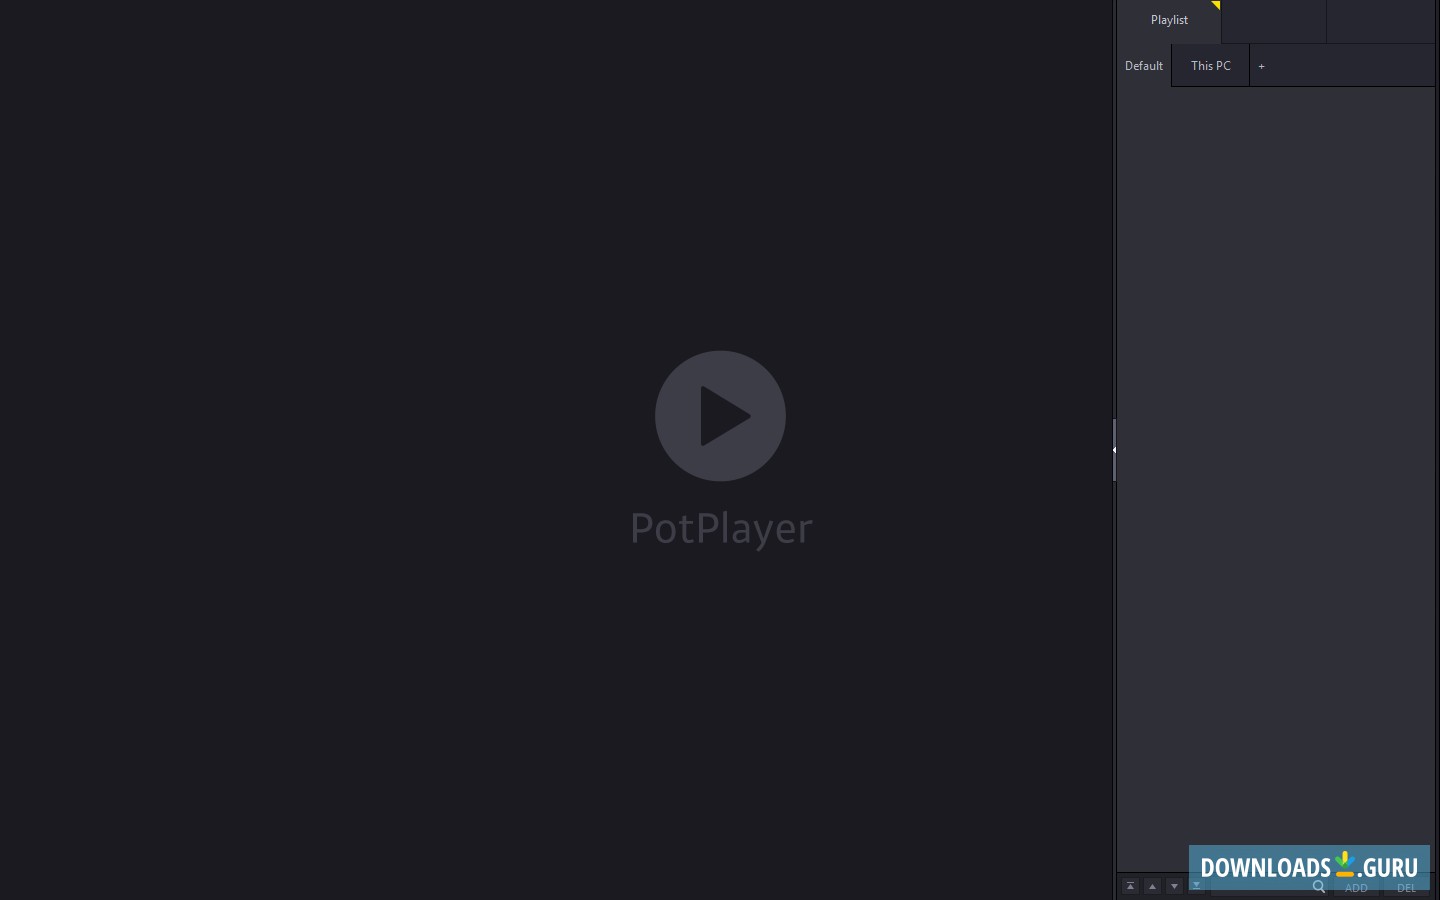 potplayer update download